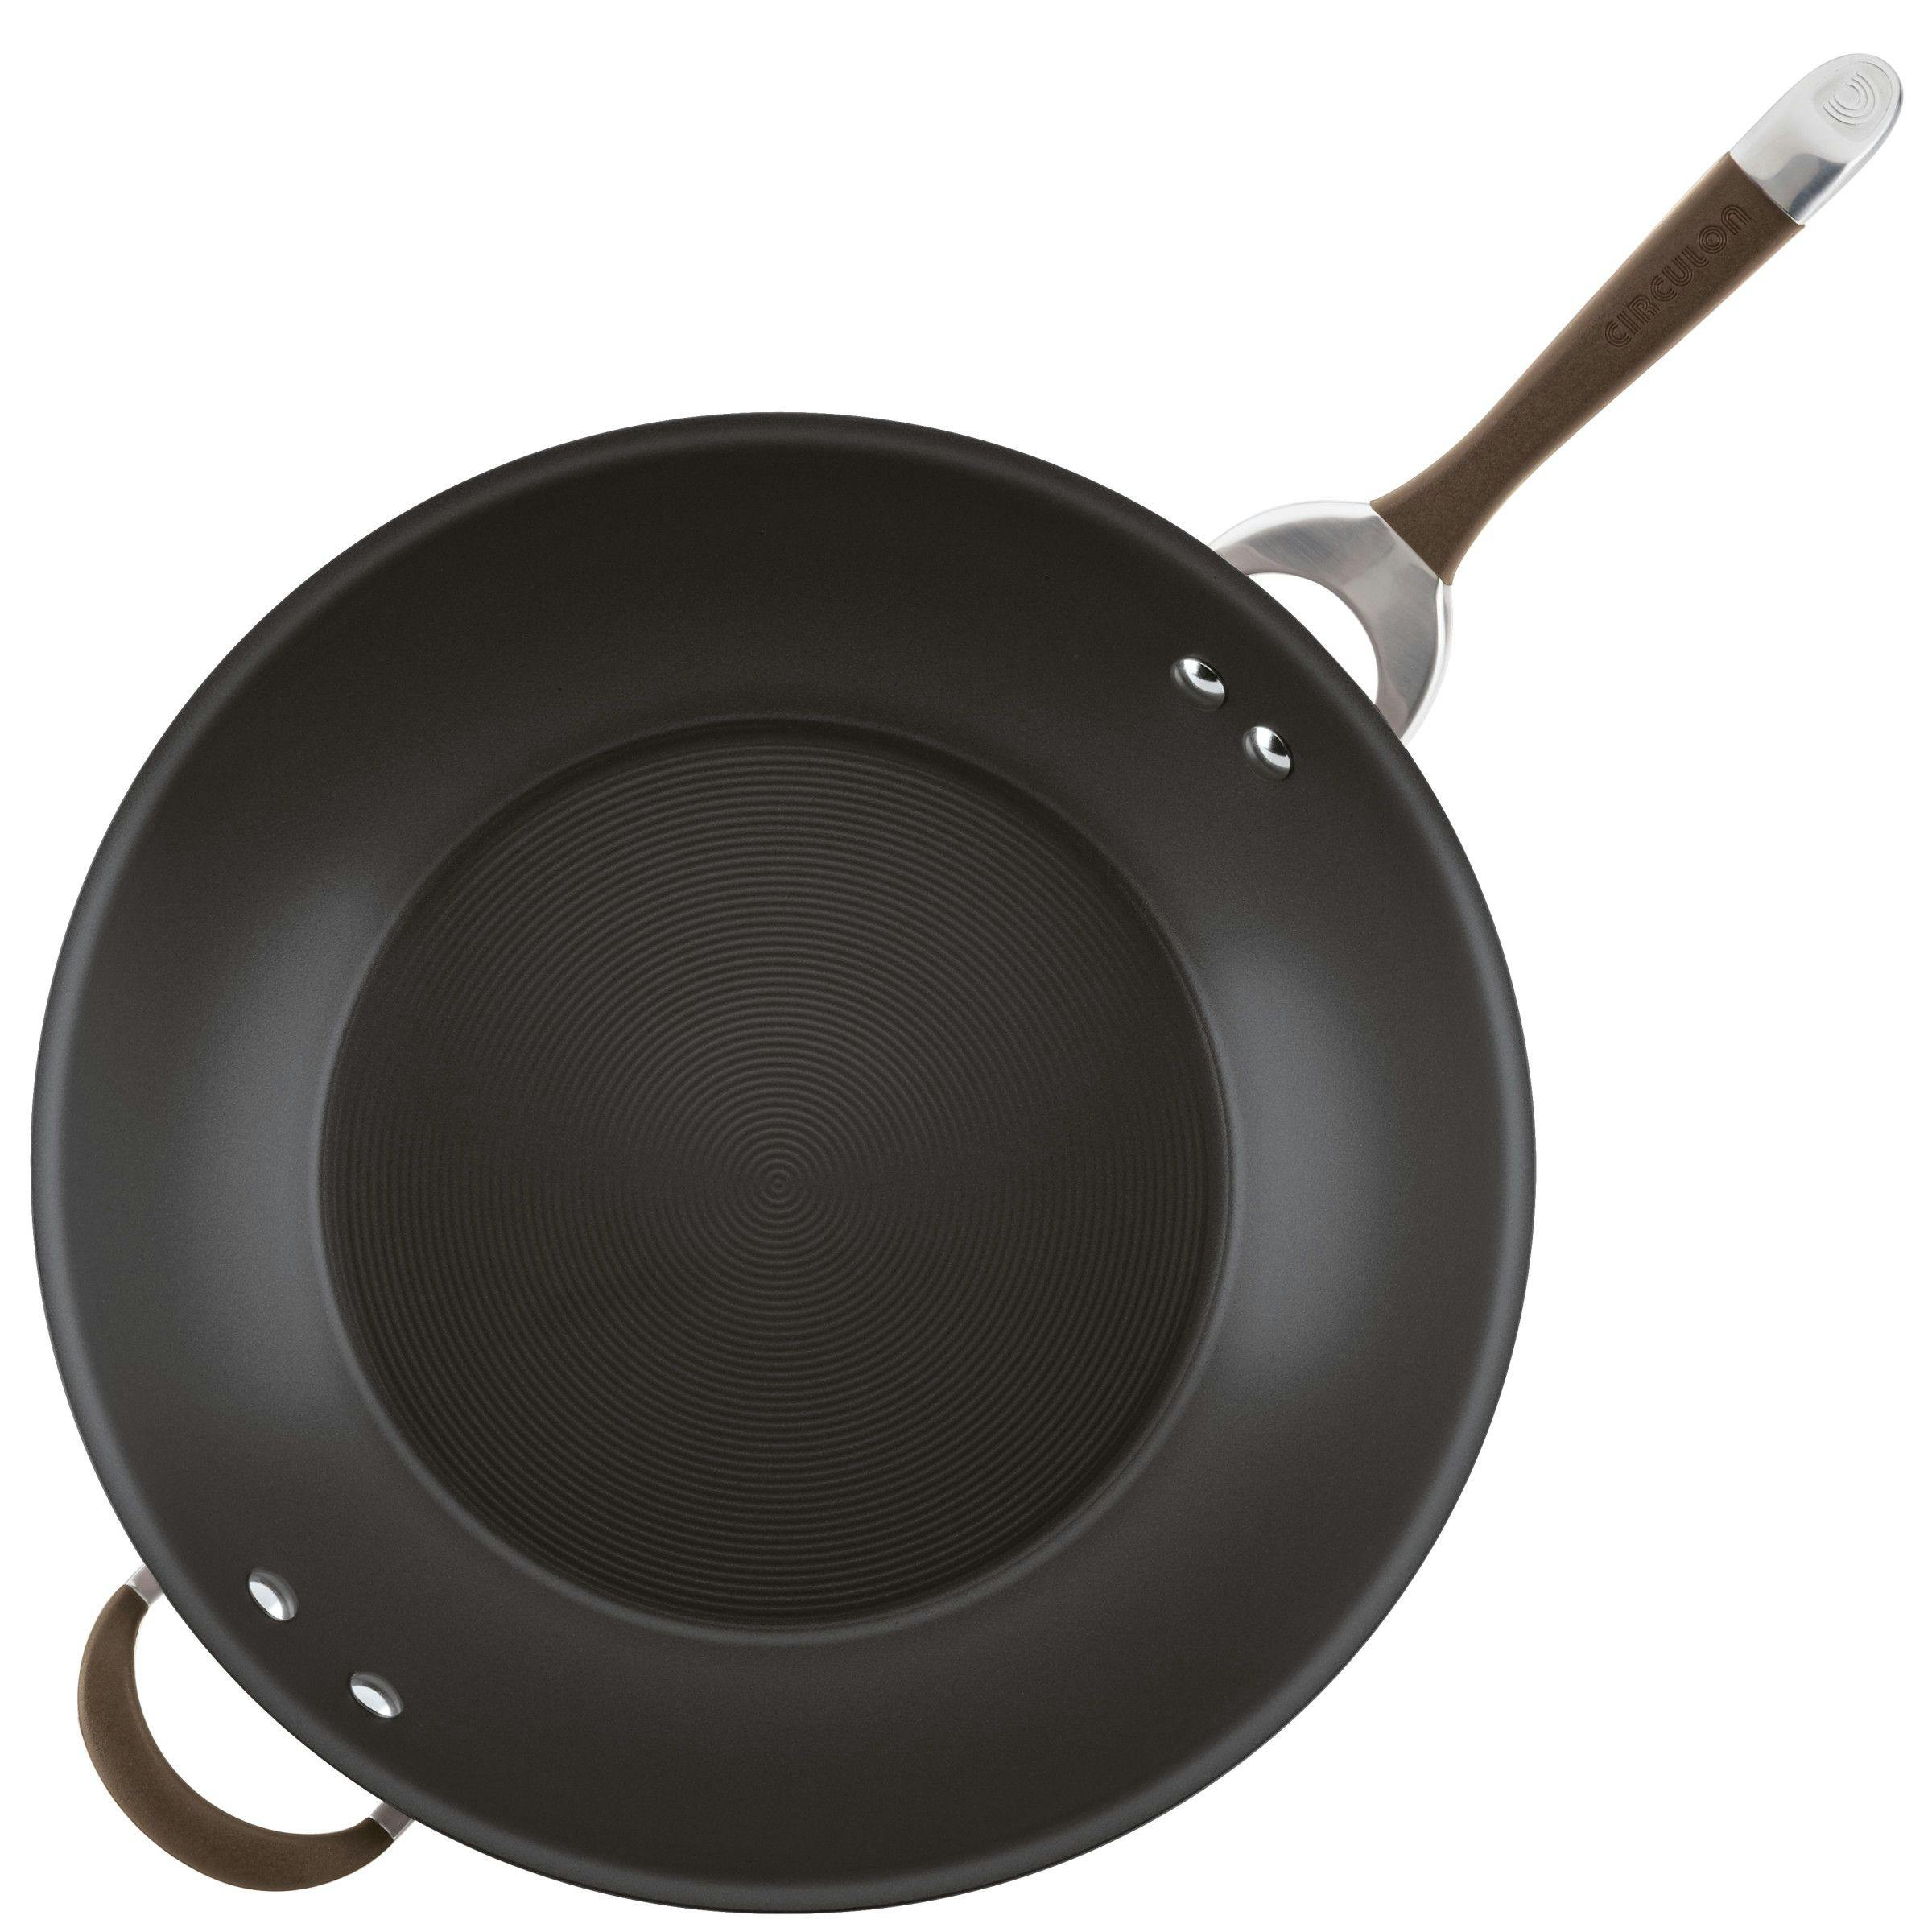 Circulon Elementum Hard-Anodized Nonstick Frying Pan with Helper